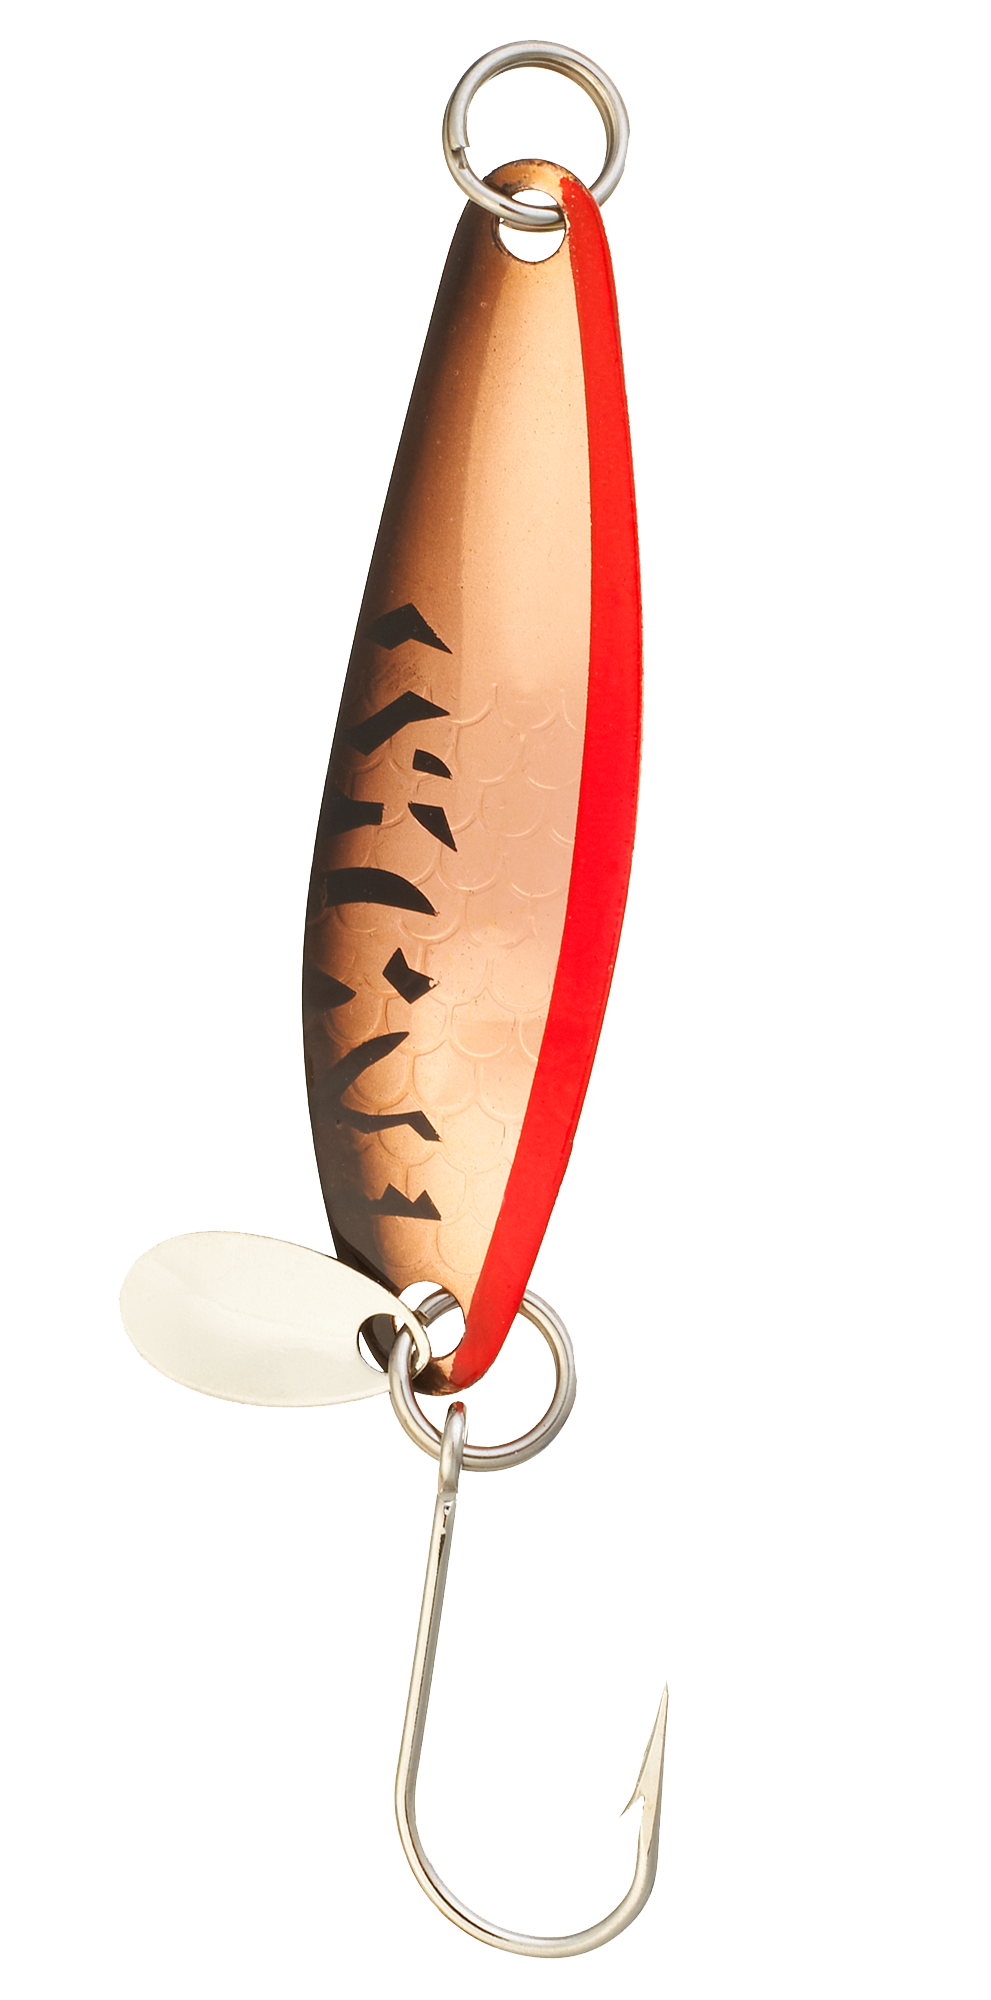 Luhr Jensen Needlefish Trolling Spoon - Copper Chicken Wing